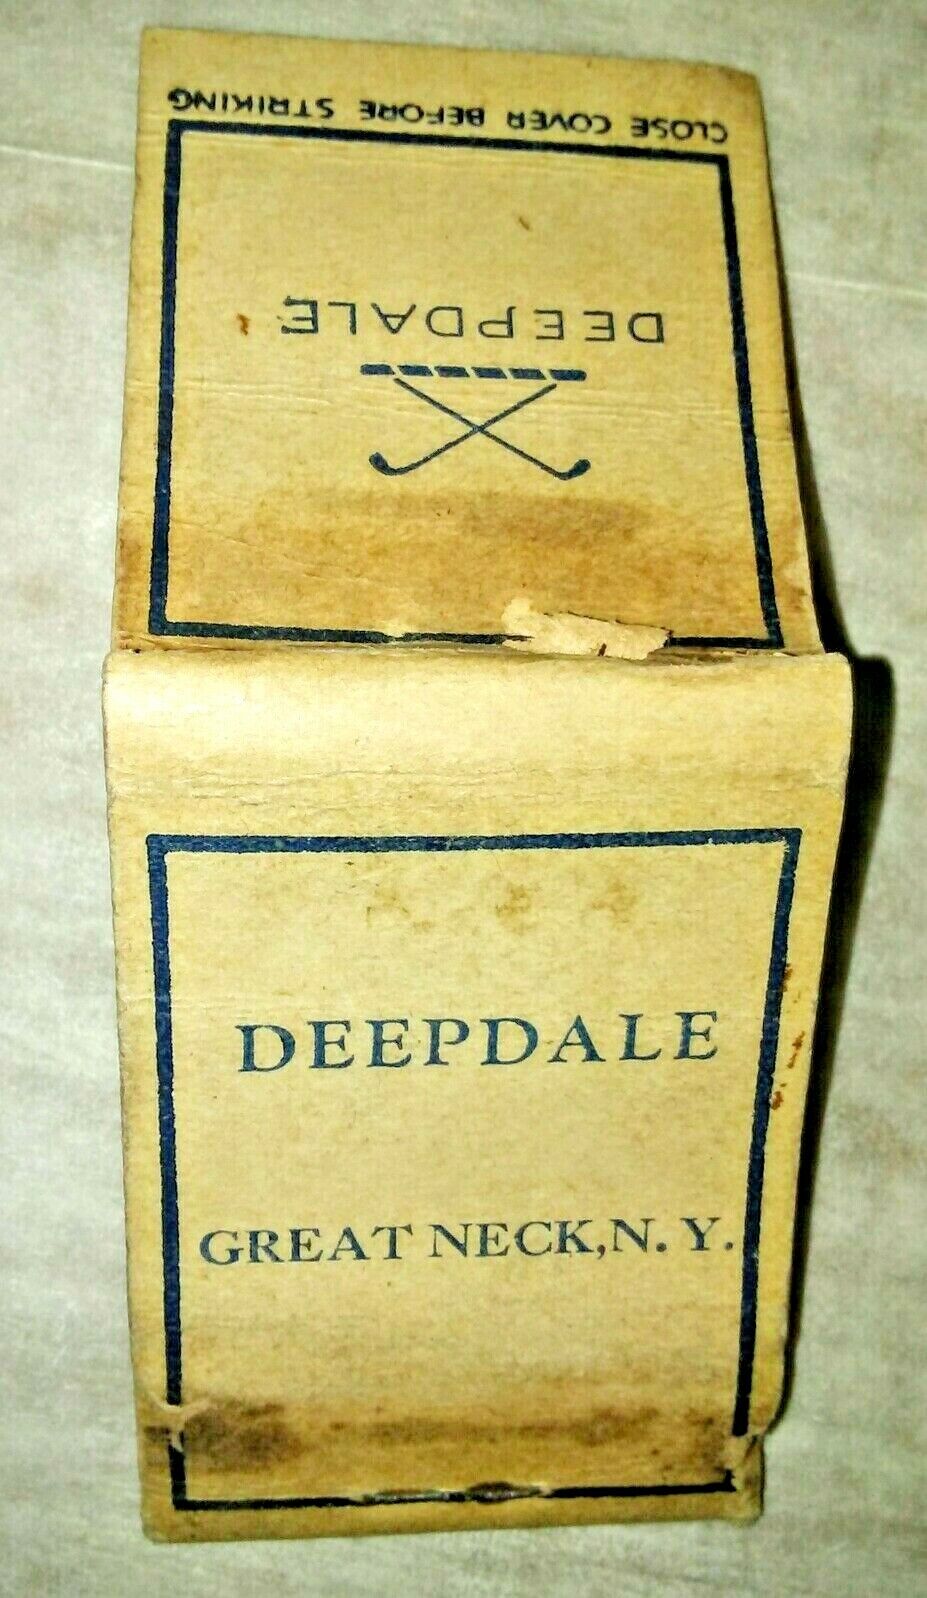 Deepdale Golf Club Great Neck New York 1924 Matchbook Cover William Vanderbilt